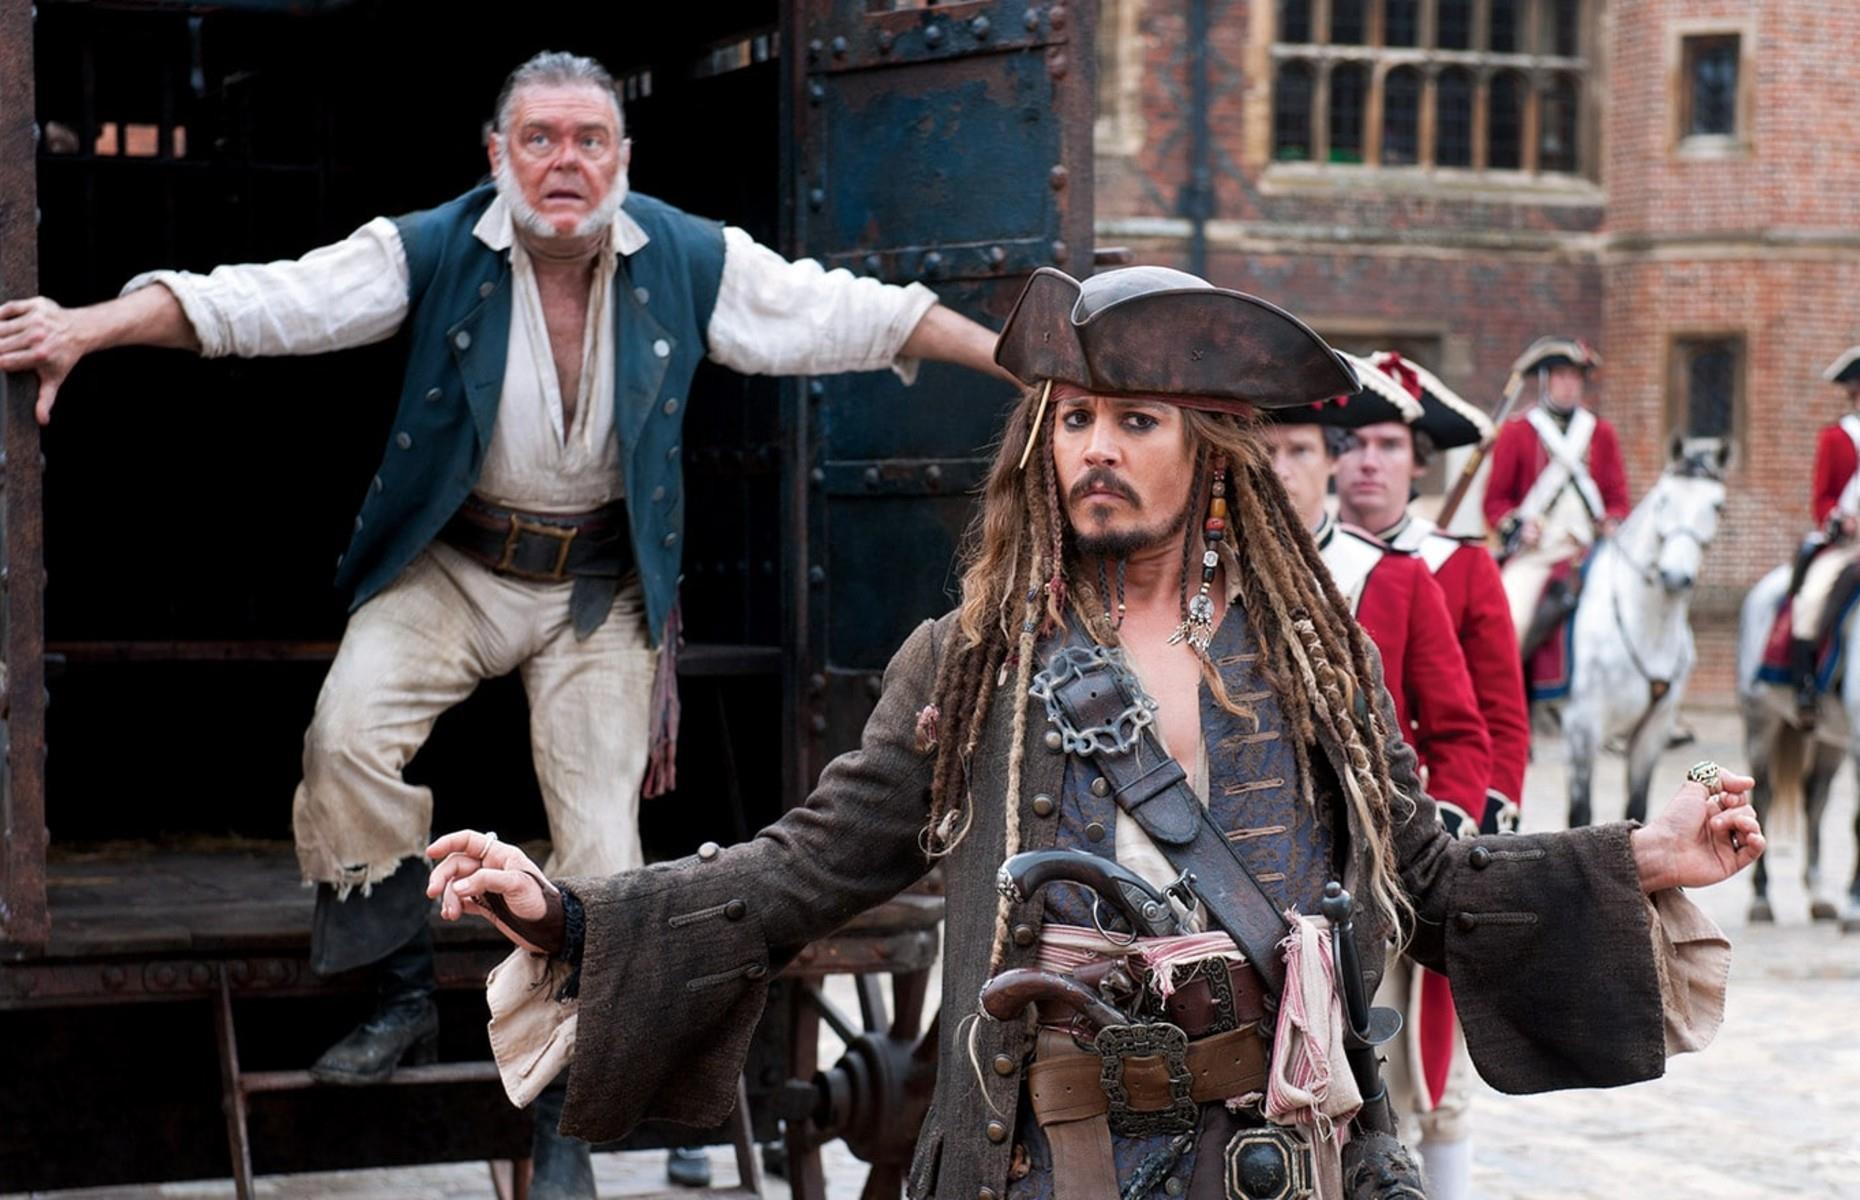 1st. Pirates of the Caribbean: On Stranger Tides (2011) – $378.5 million (£268m); profit: $621.5 million (£474m)